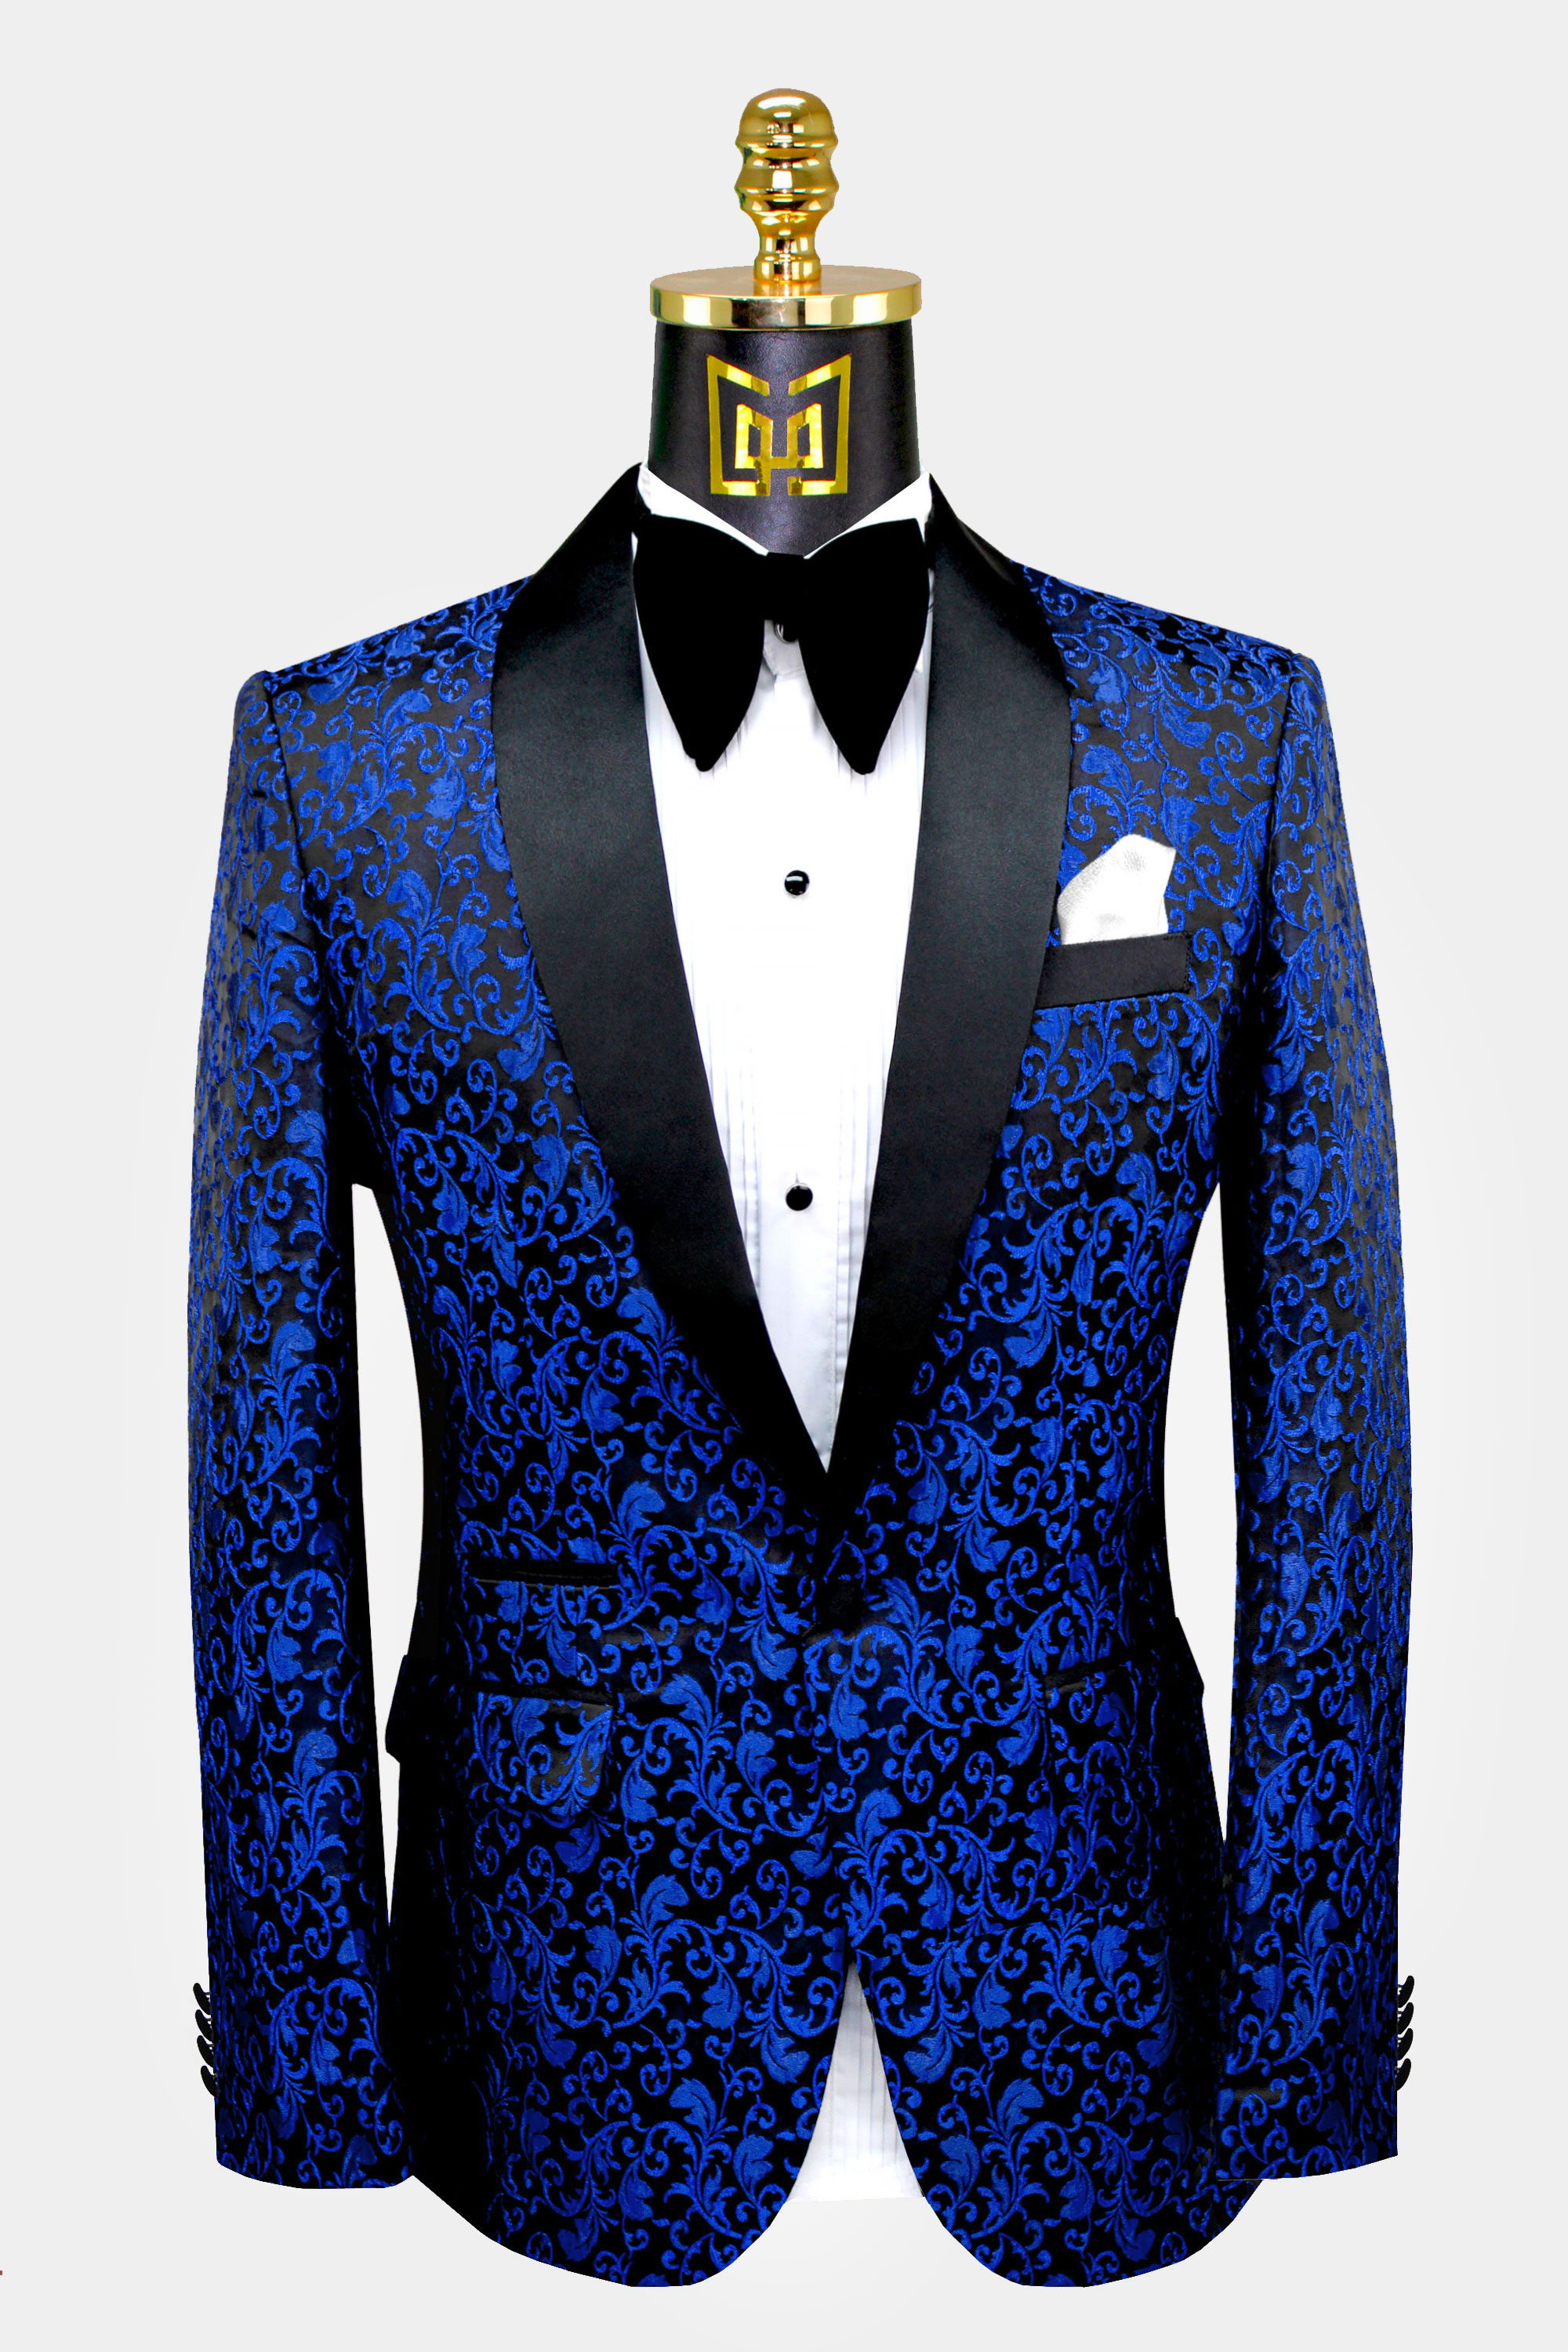 ROYAL BLUE Formal Paisley Tuxedo Suit Dress Vest Waistcoat Wedding Party Prom 